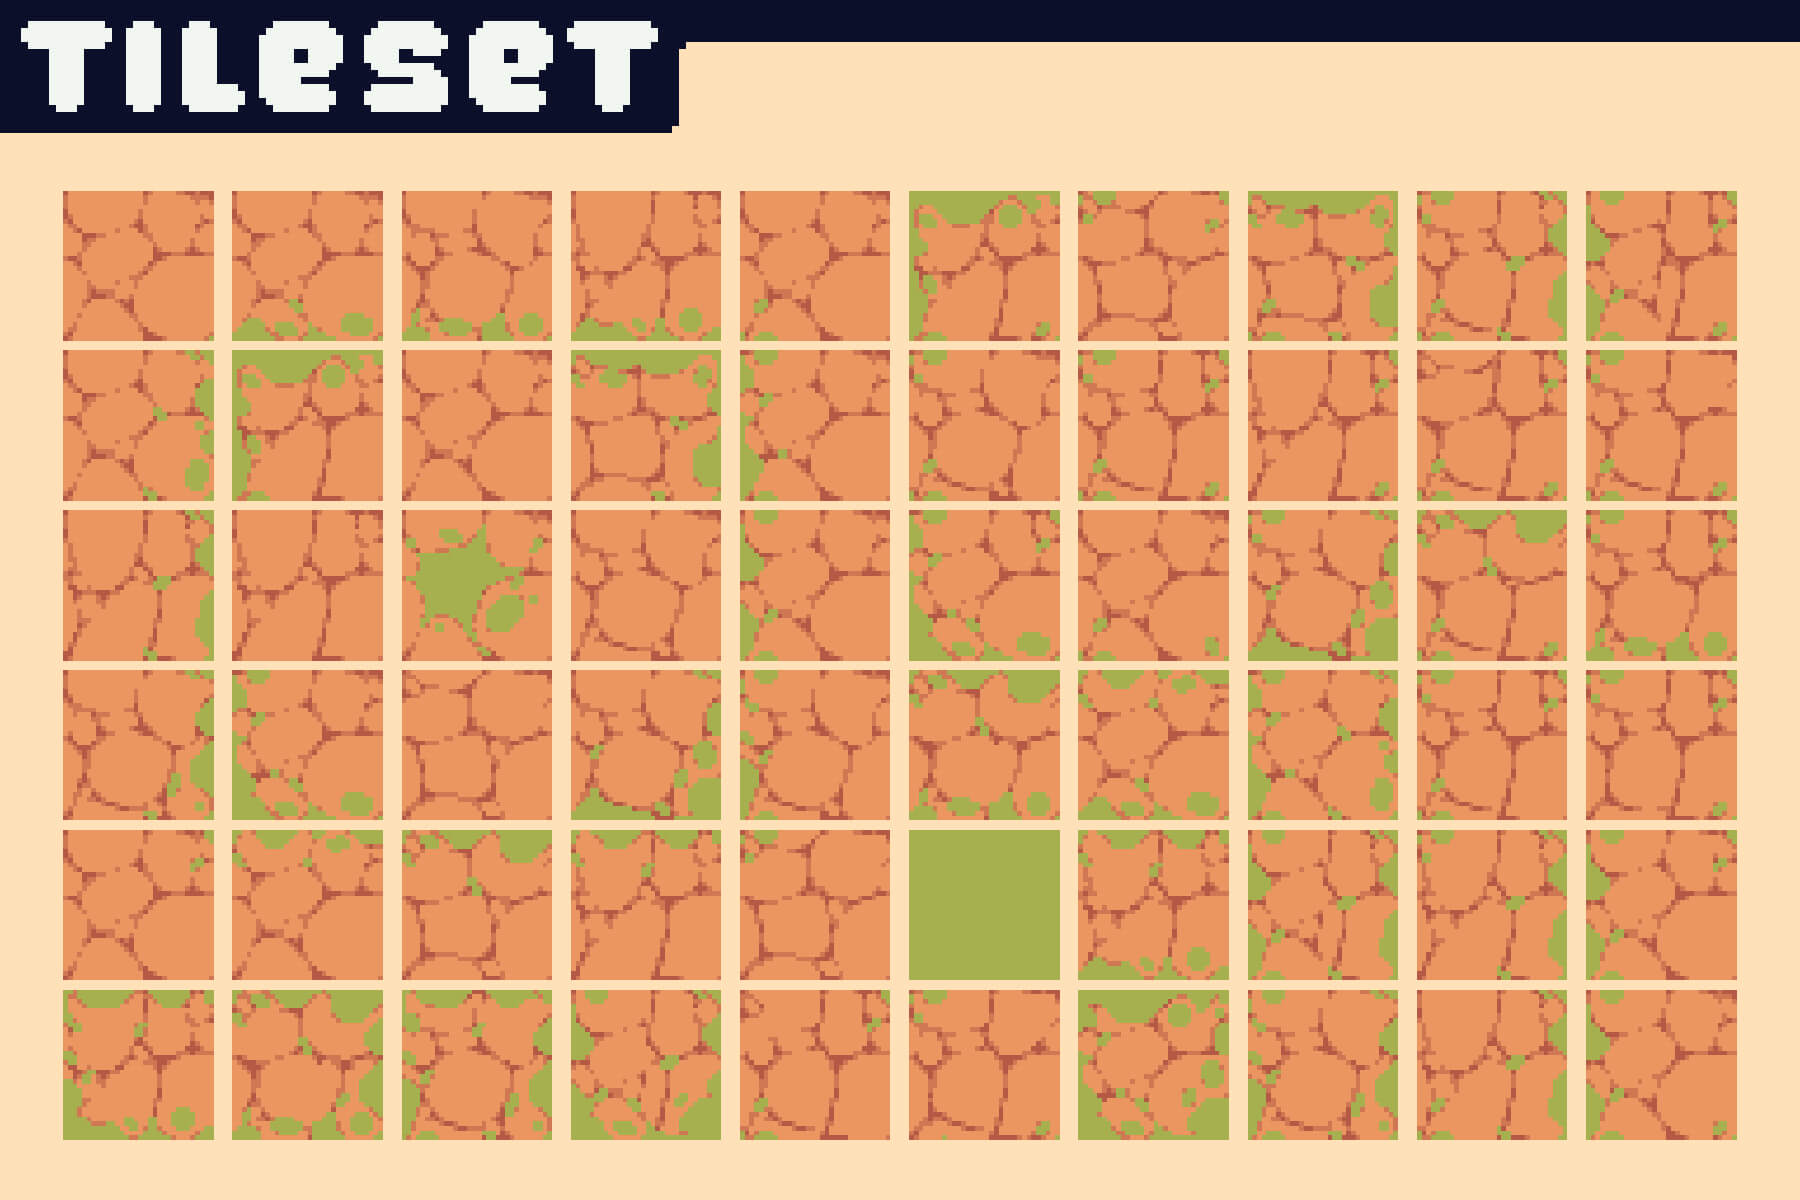 Desert tilemap for my tower defense game : r/TowerDefense